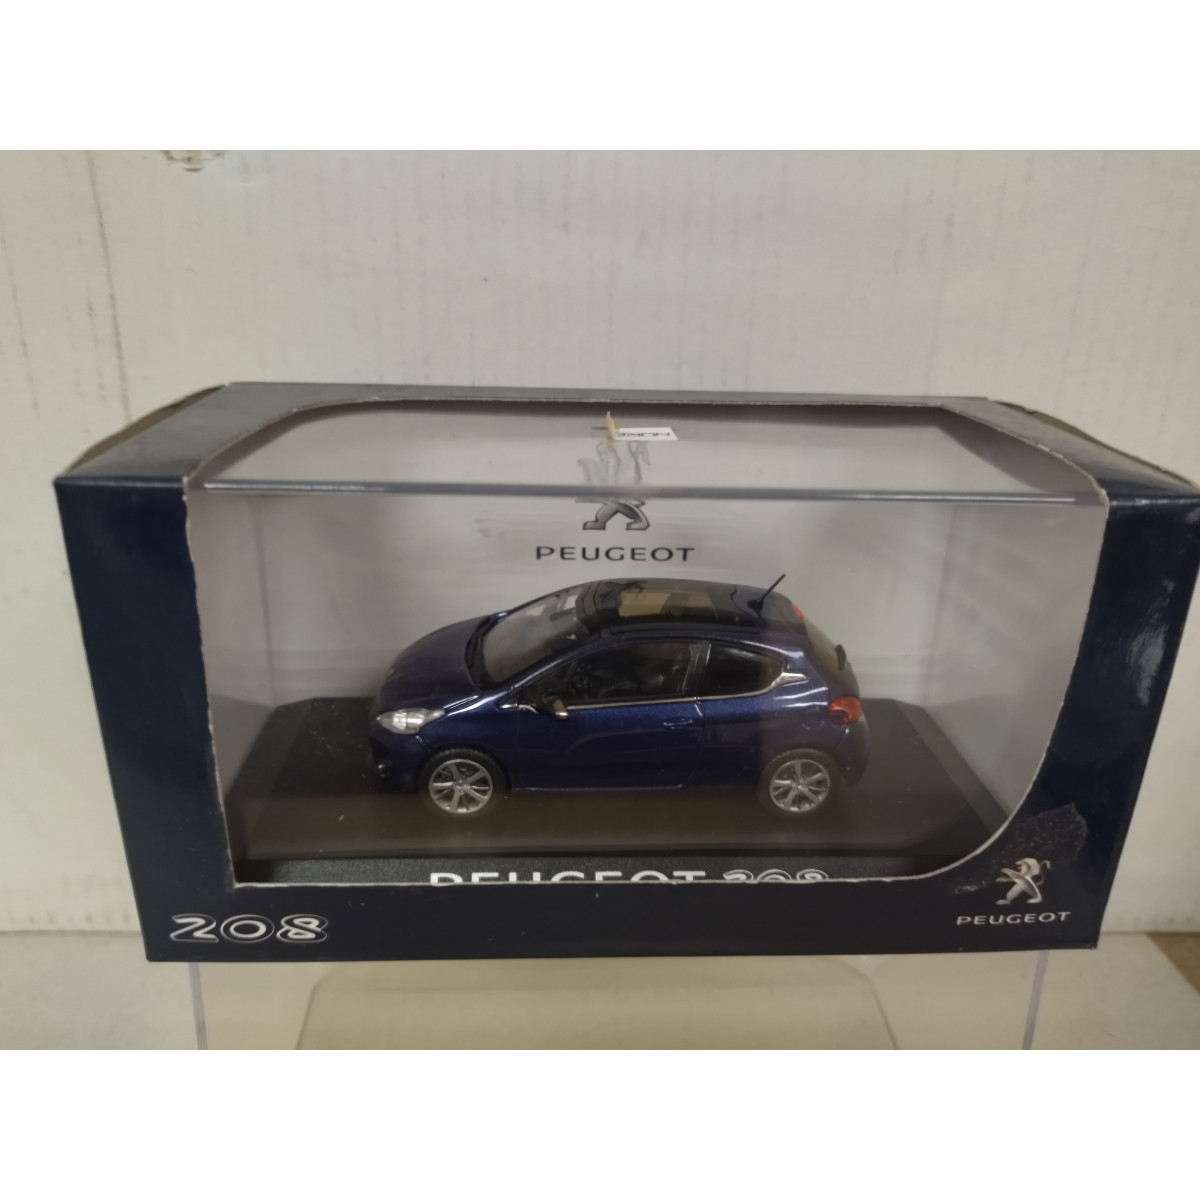 Peugeot 208 Bleu virtuel 3portes 472774 Norev